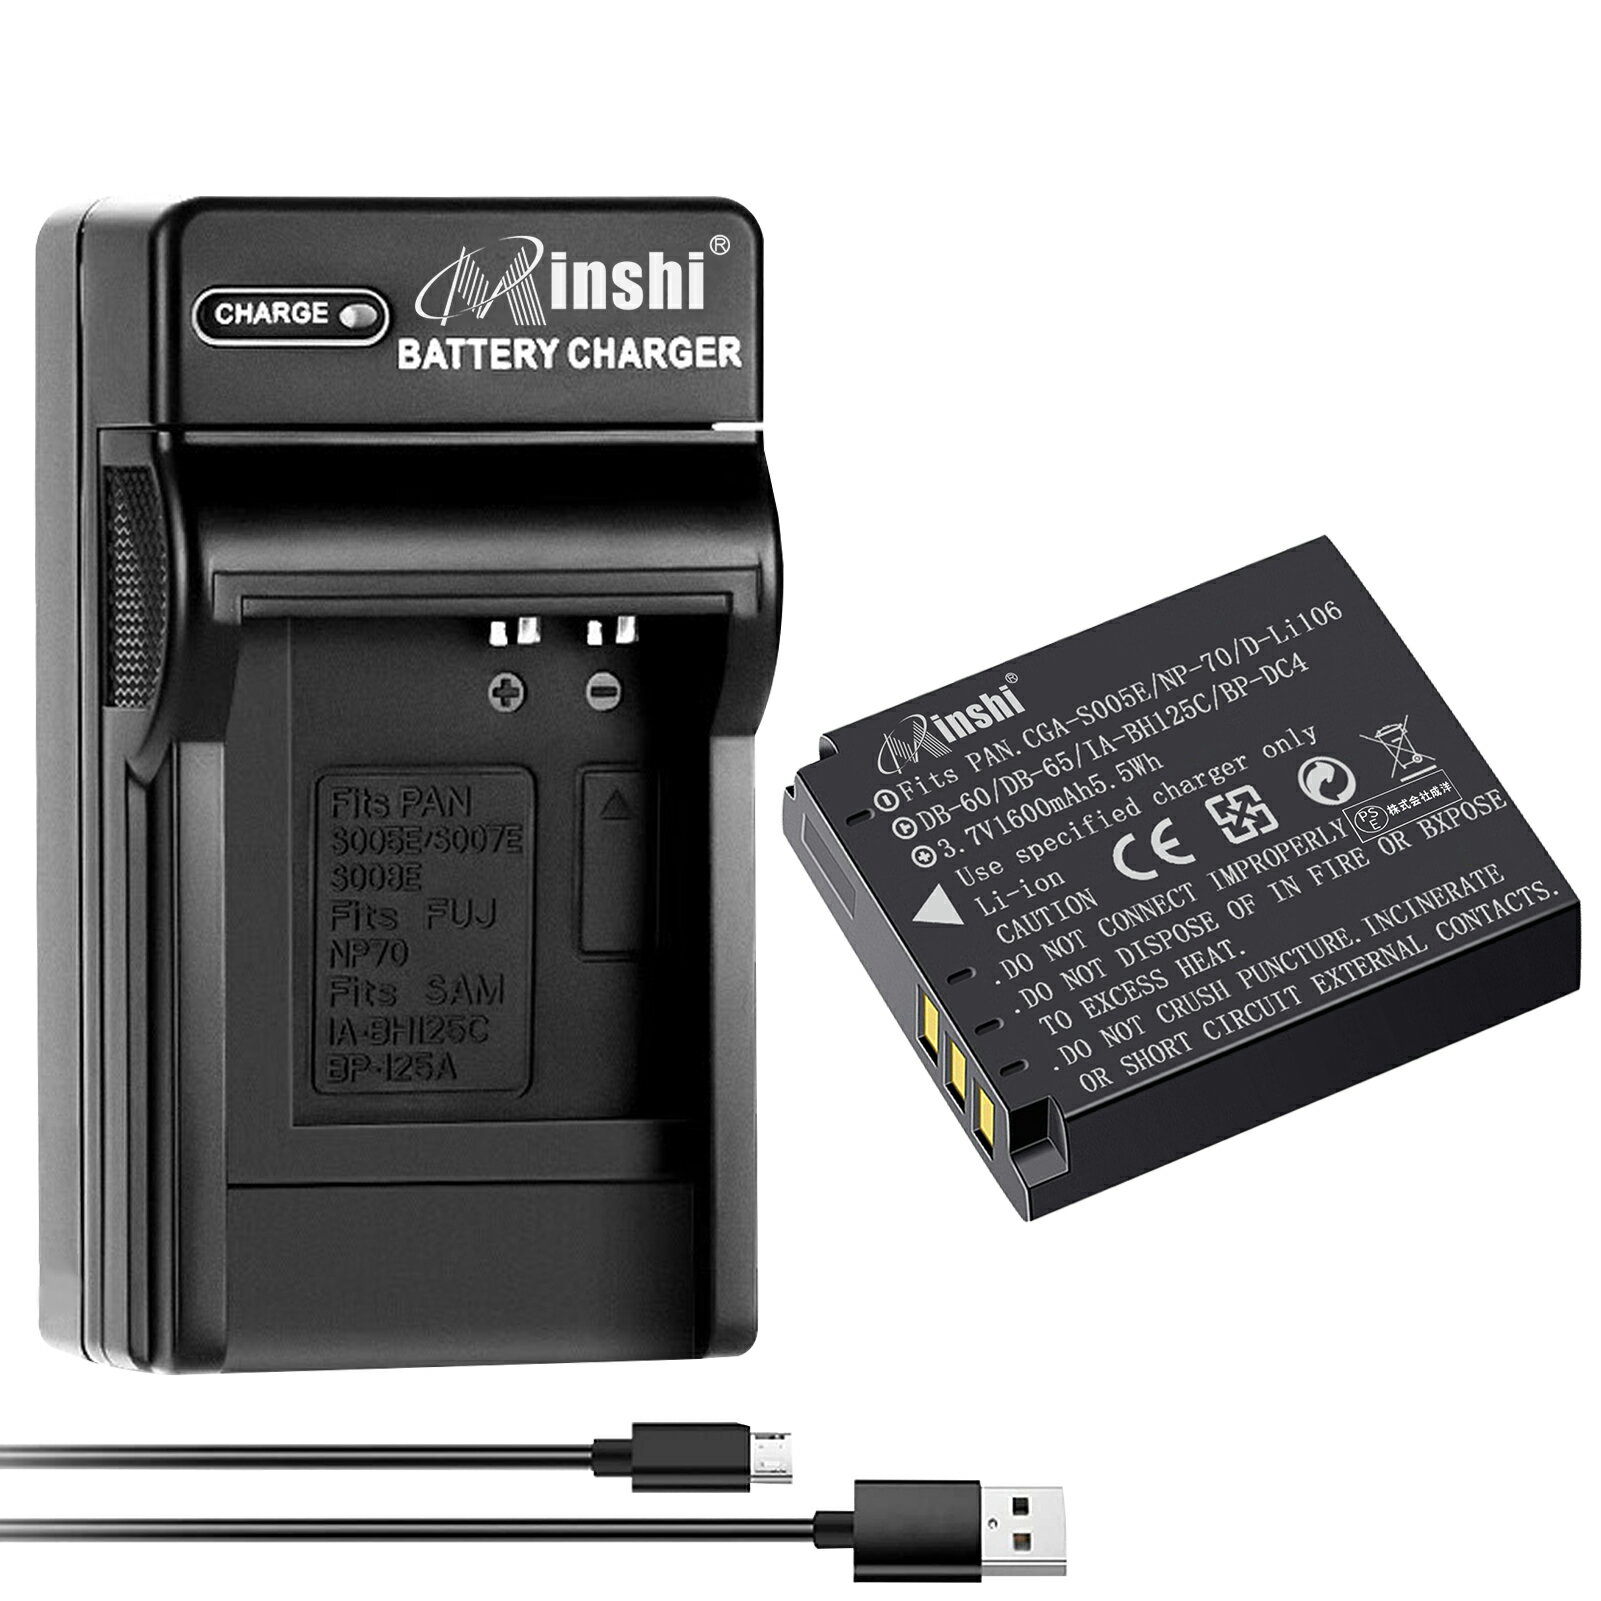 【USB充電器と電池1個】minshi 新品 Panasonic DB-65 互換バッテリー 1600mAh XAD 高品質交換用リチャージブル カメラバッテリー リチウムイオンバッテリー デジタルカメラ デジカメ 充電池 PSE認証 1年間保証 予備バッテリー